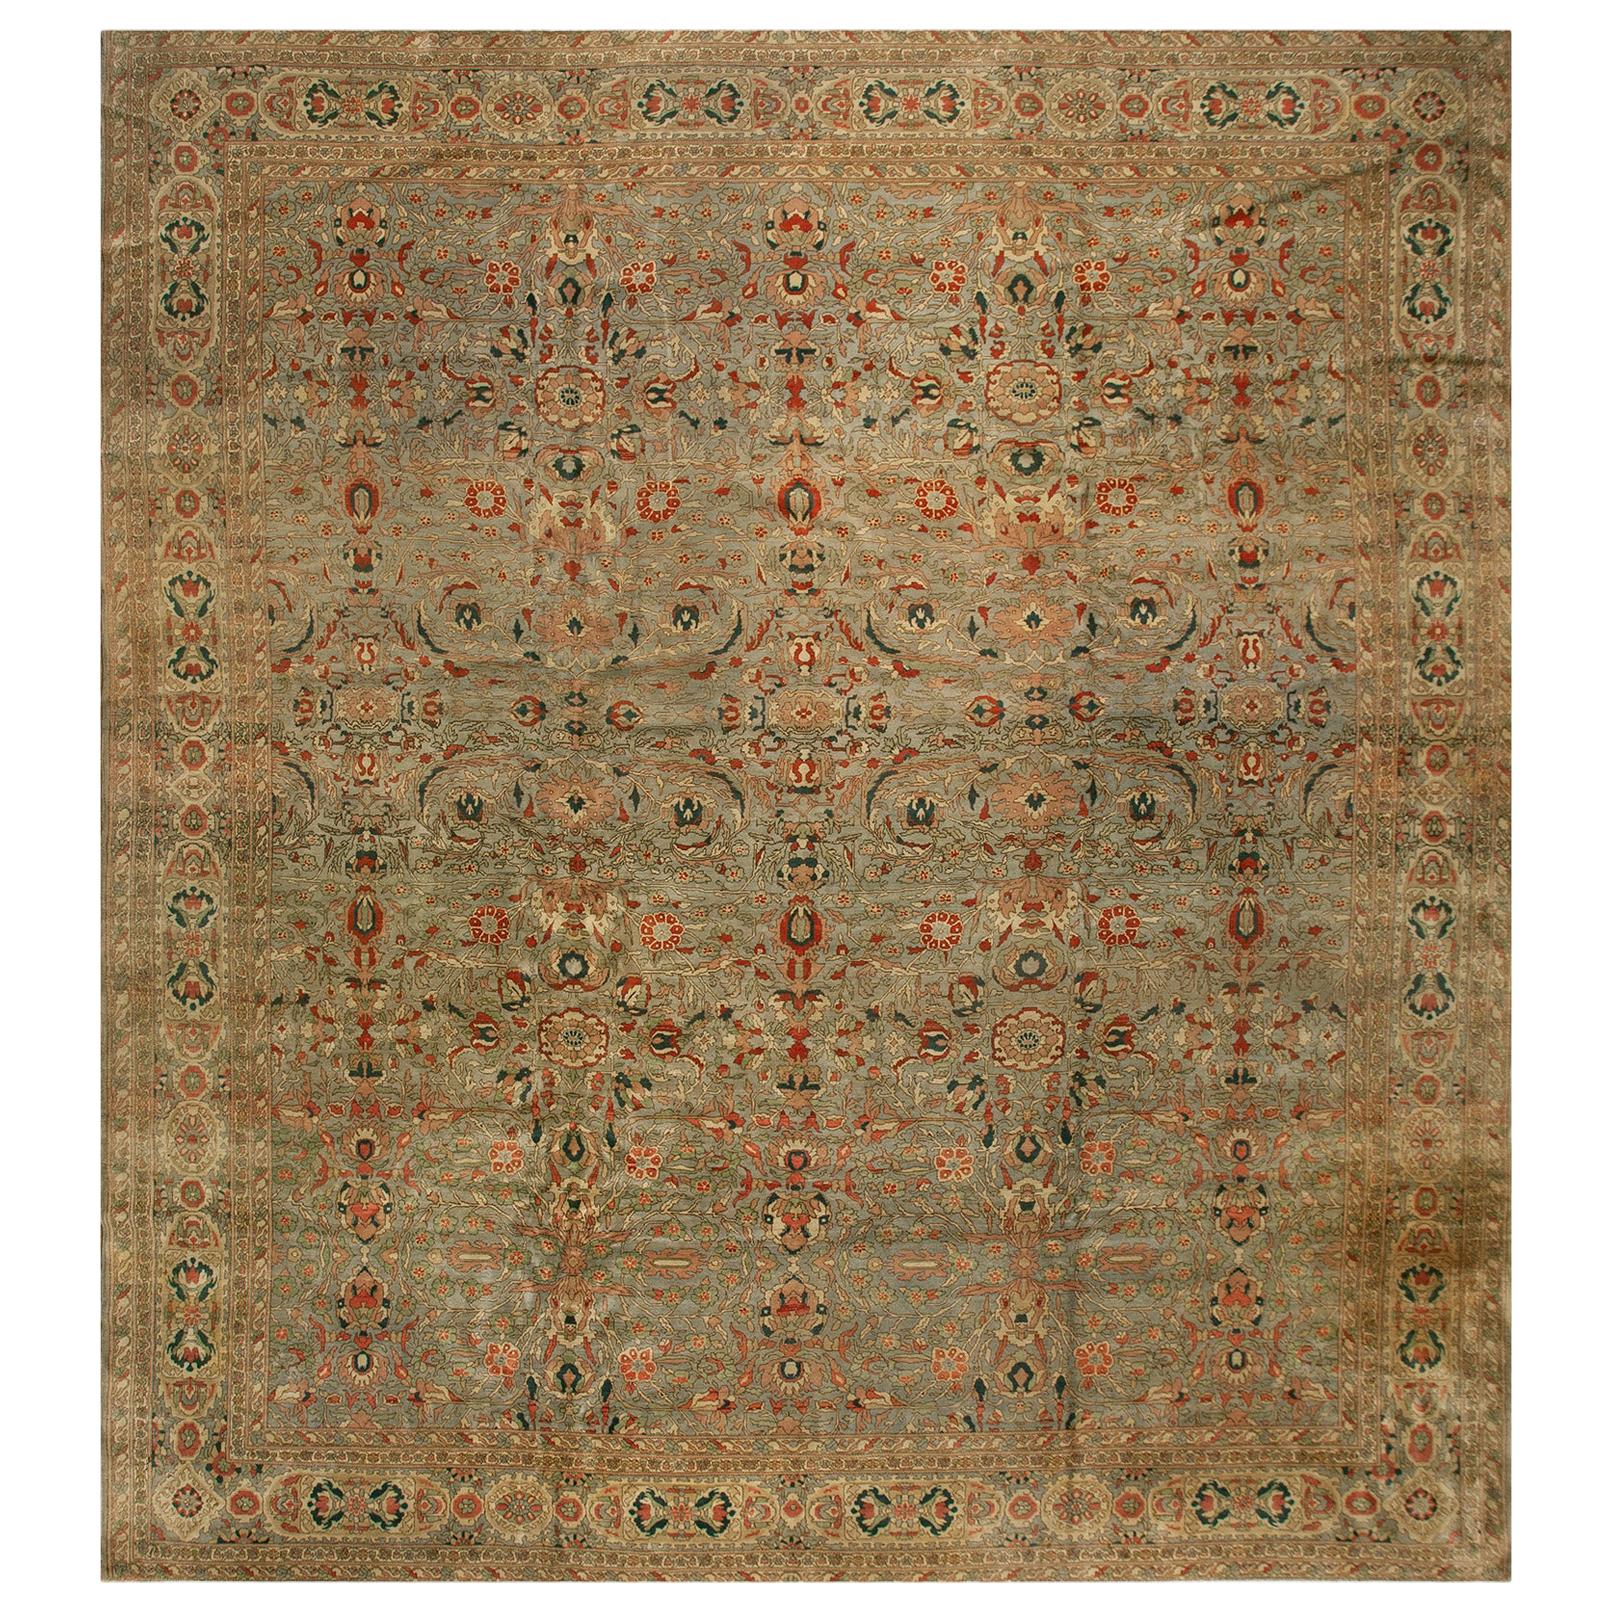 Early 20th Century Turkish Sivas Carpet (  13'9" x 15'6" - 419 x 472 ) For Sale